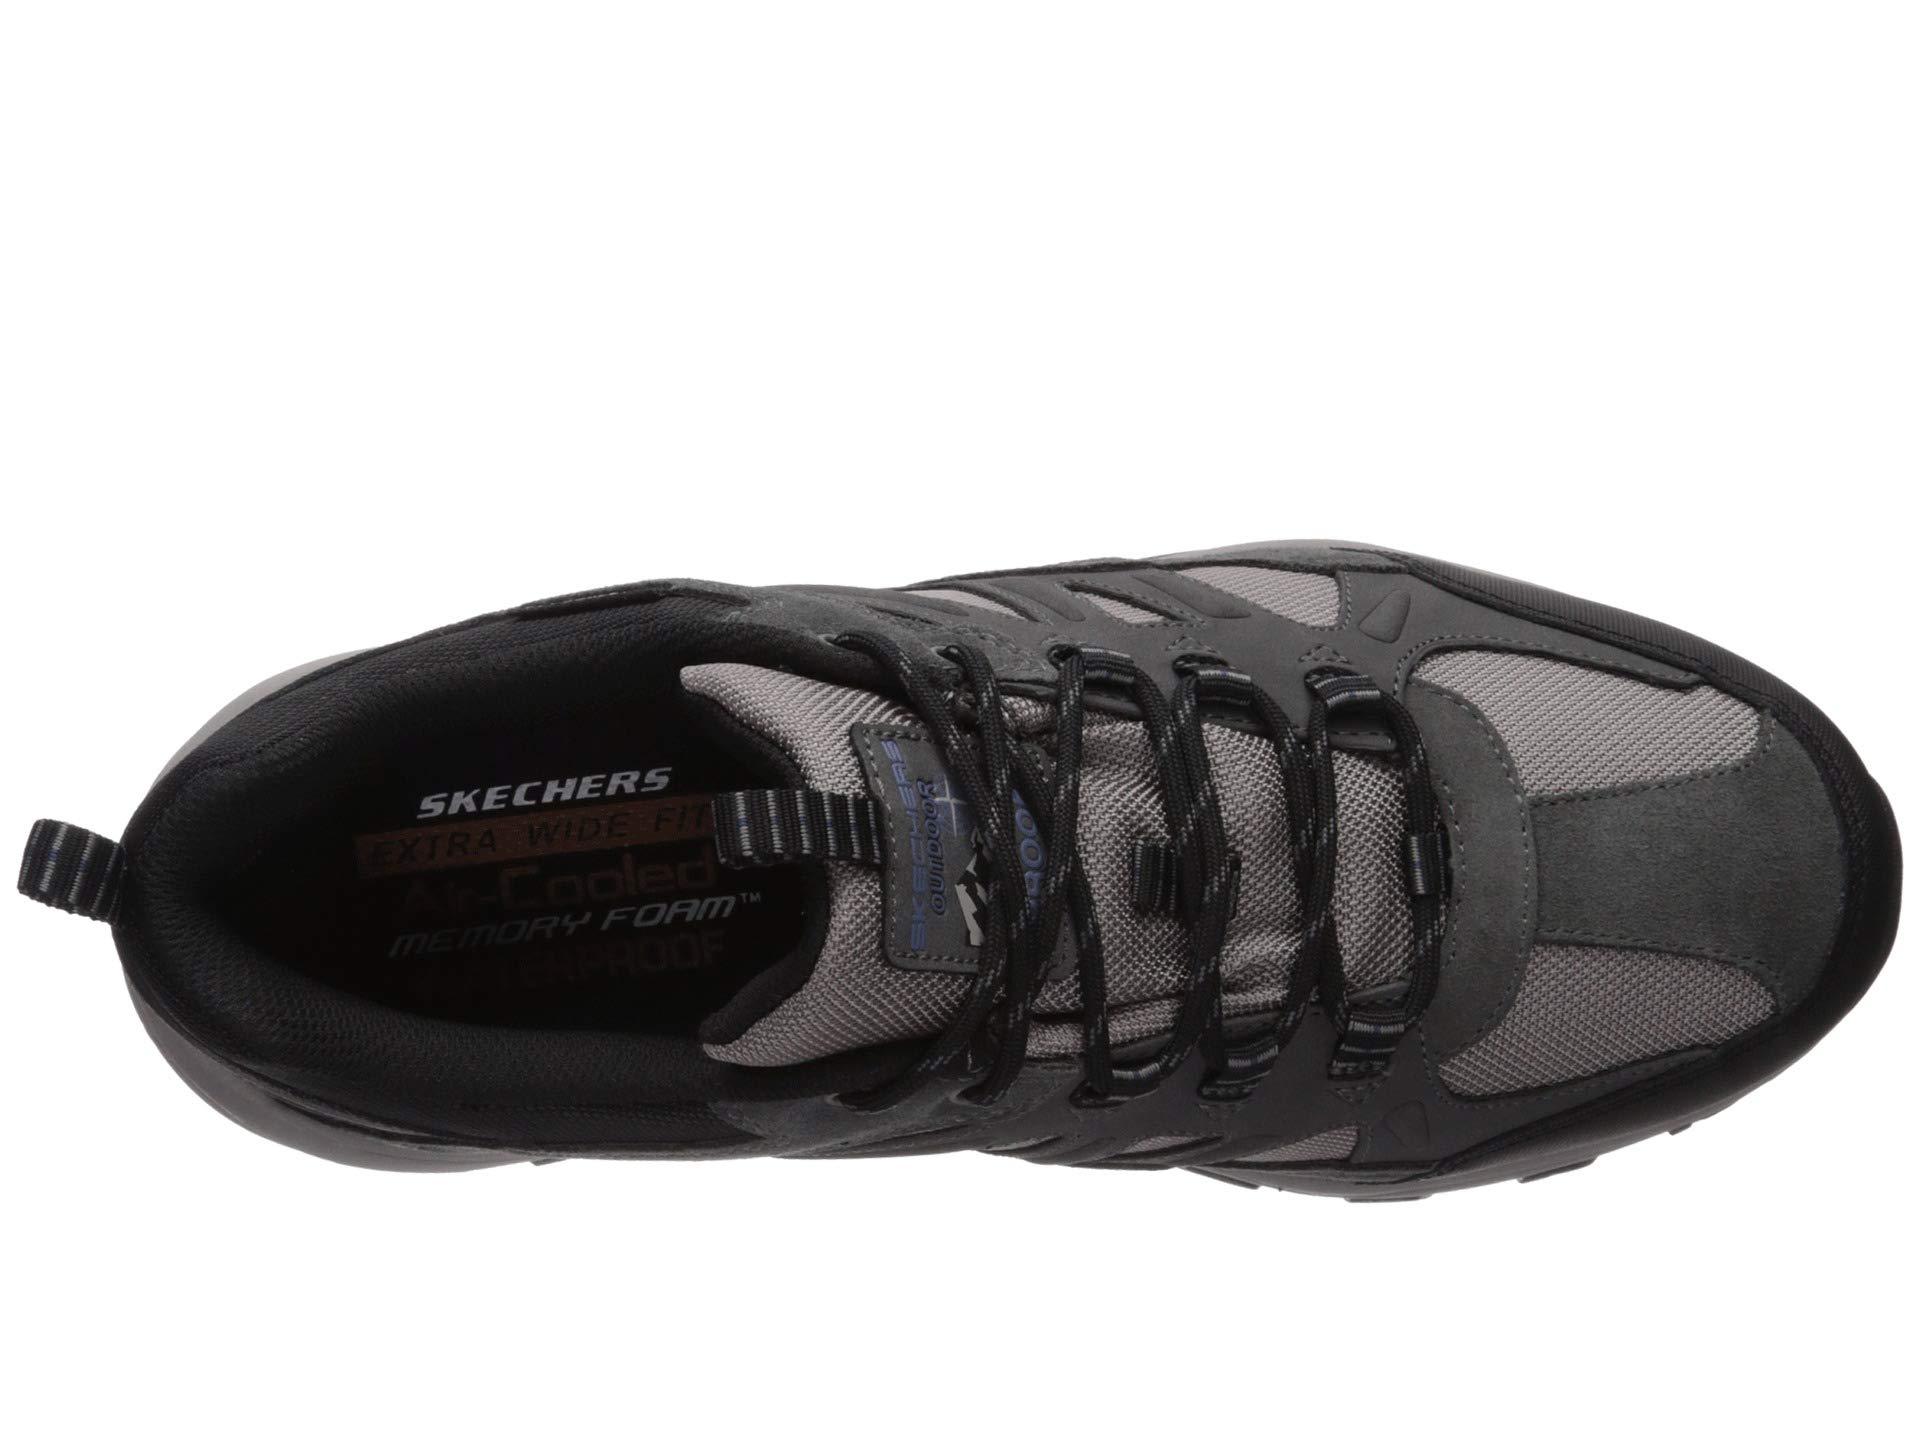 Skechers Leather Relaxed Fit Selmen - Enago in Gray for Men - Lyst